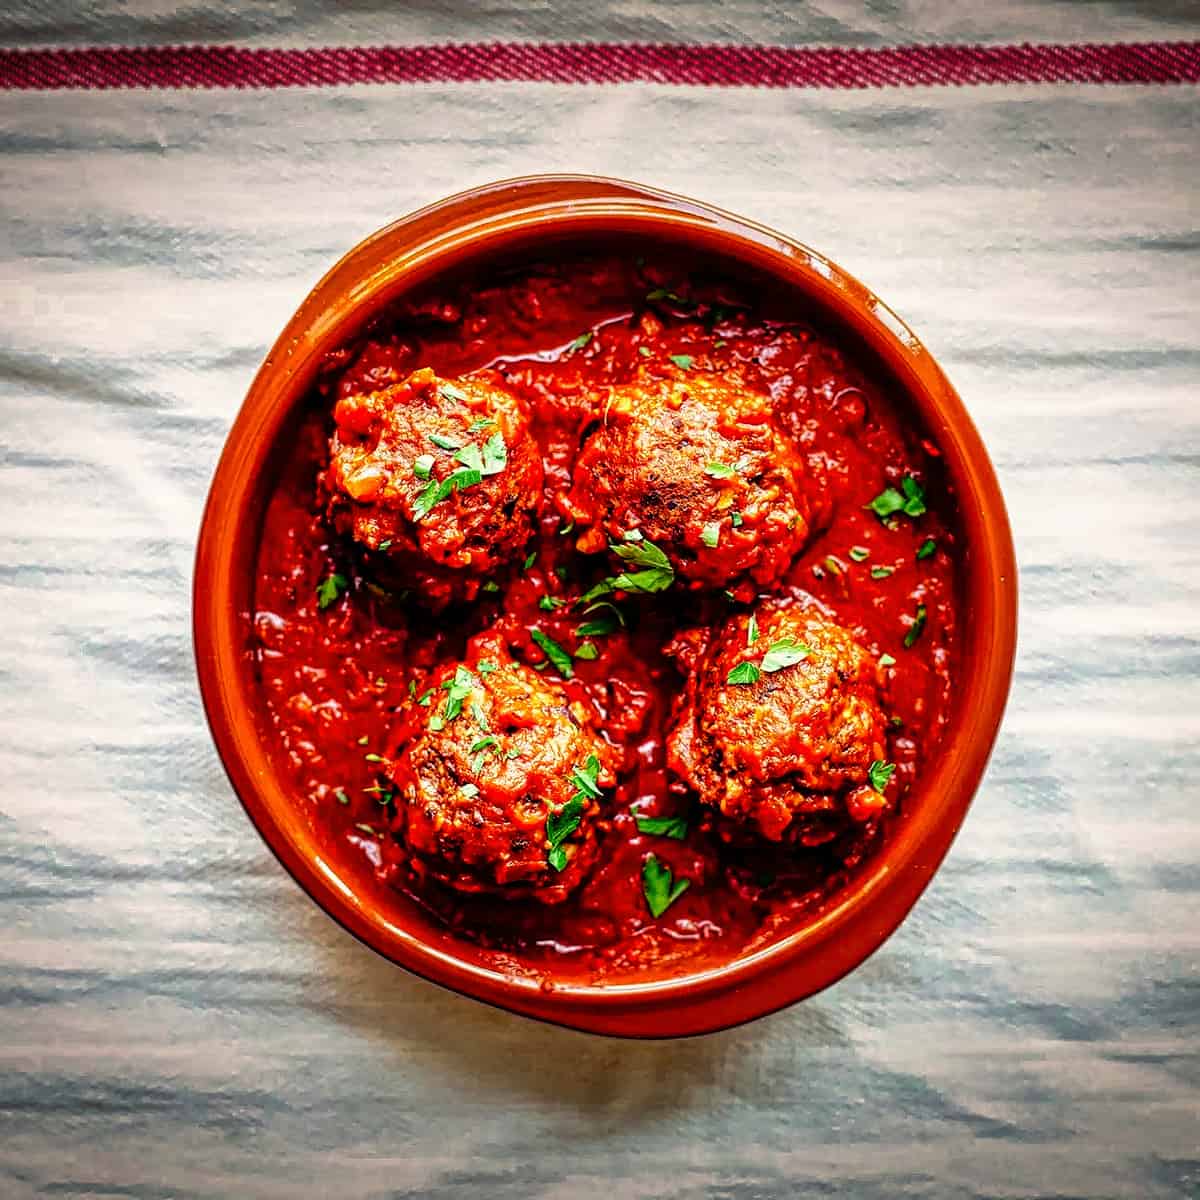 Smoky Spanish-Style Vegan Meatballs - Spanish meatball recipes